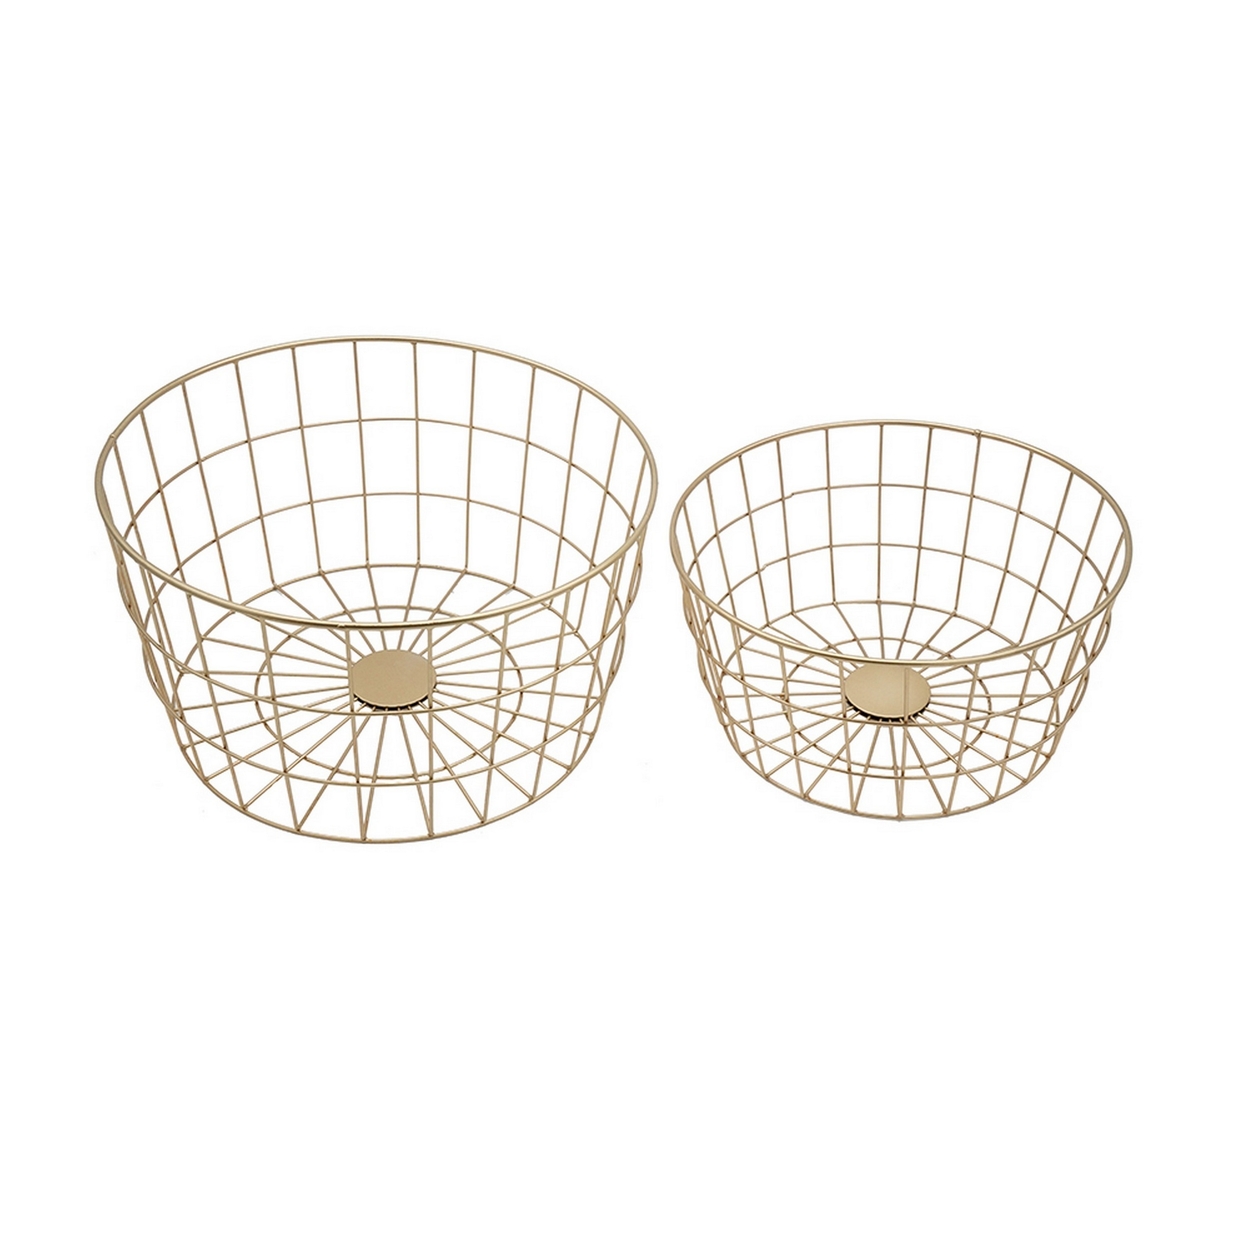 Set Of 2 Modern Round Decorative Iron Baskets, Mesh Design, Gold- Saltoro Sherpi